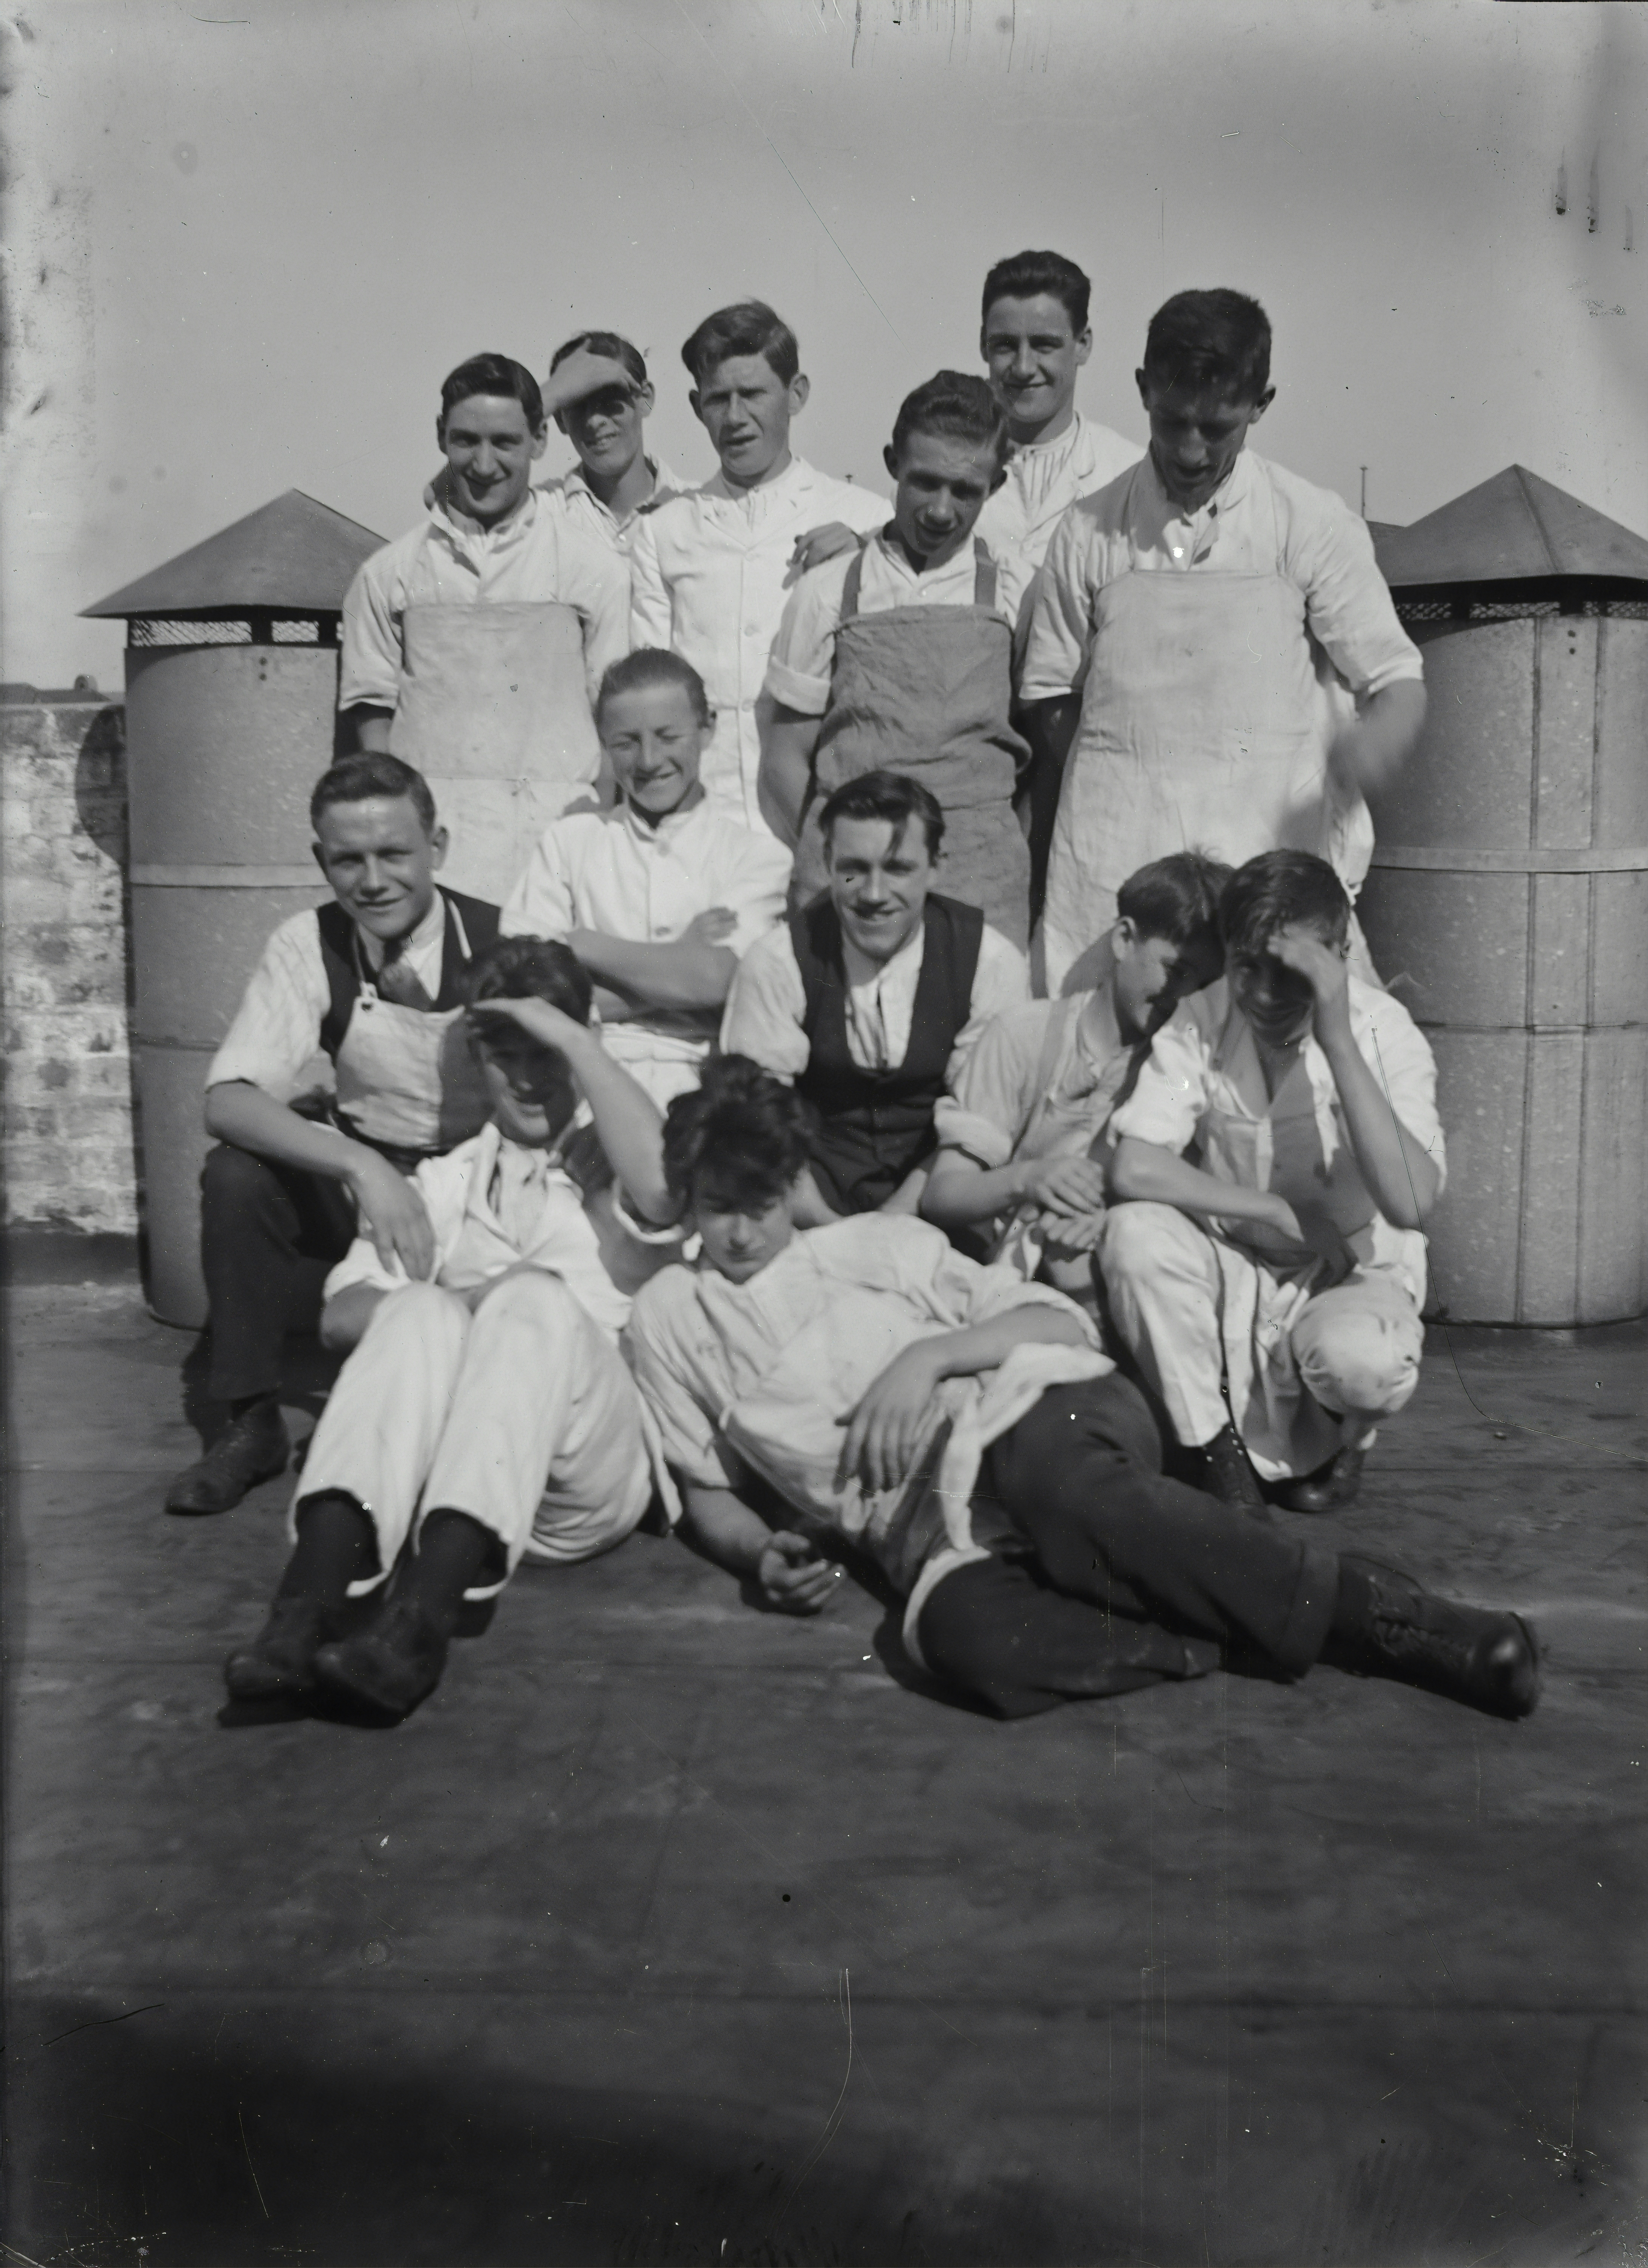 Men in Factory Uniforms, circa 1920 - 1930